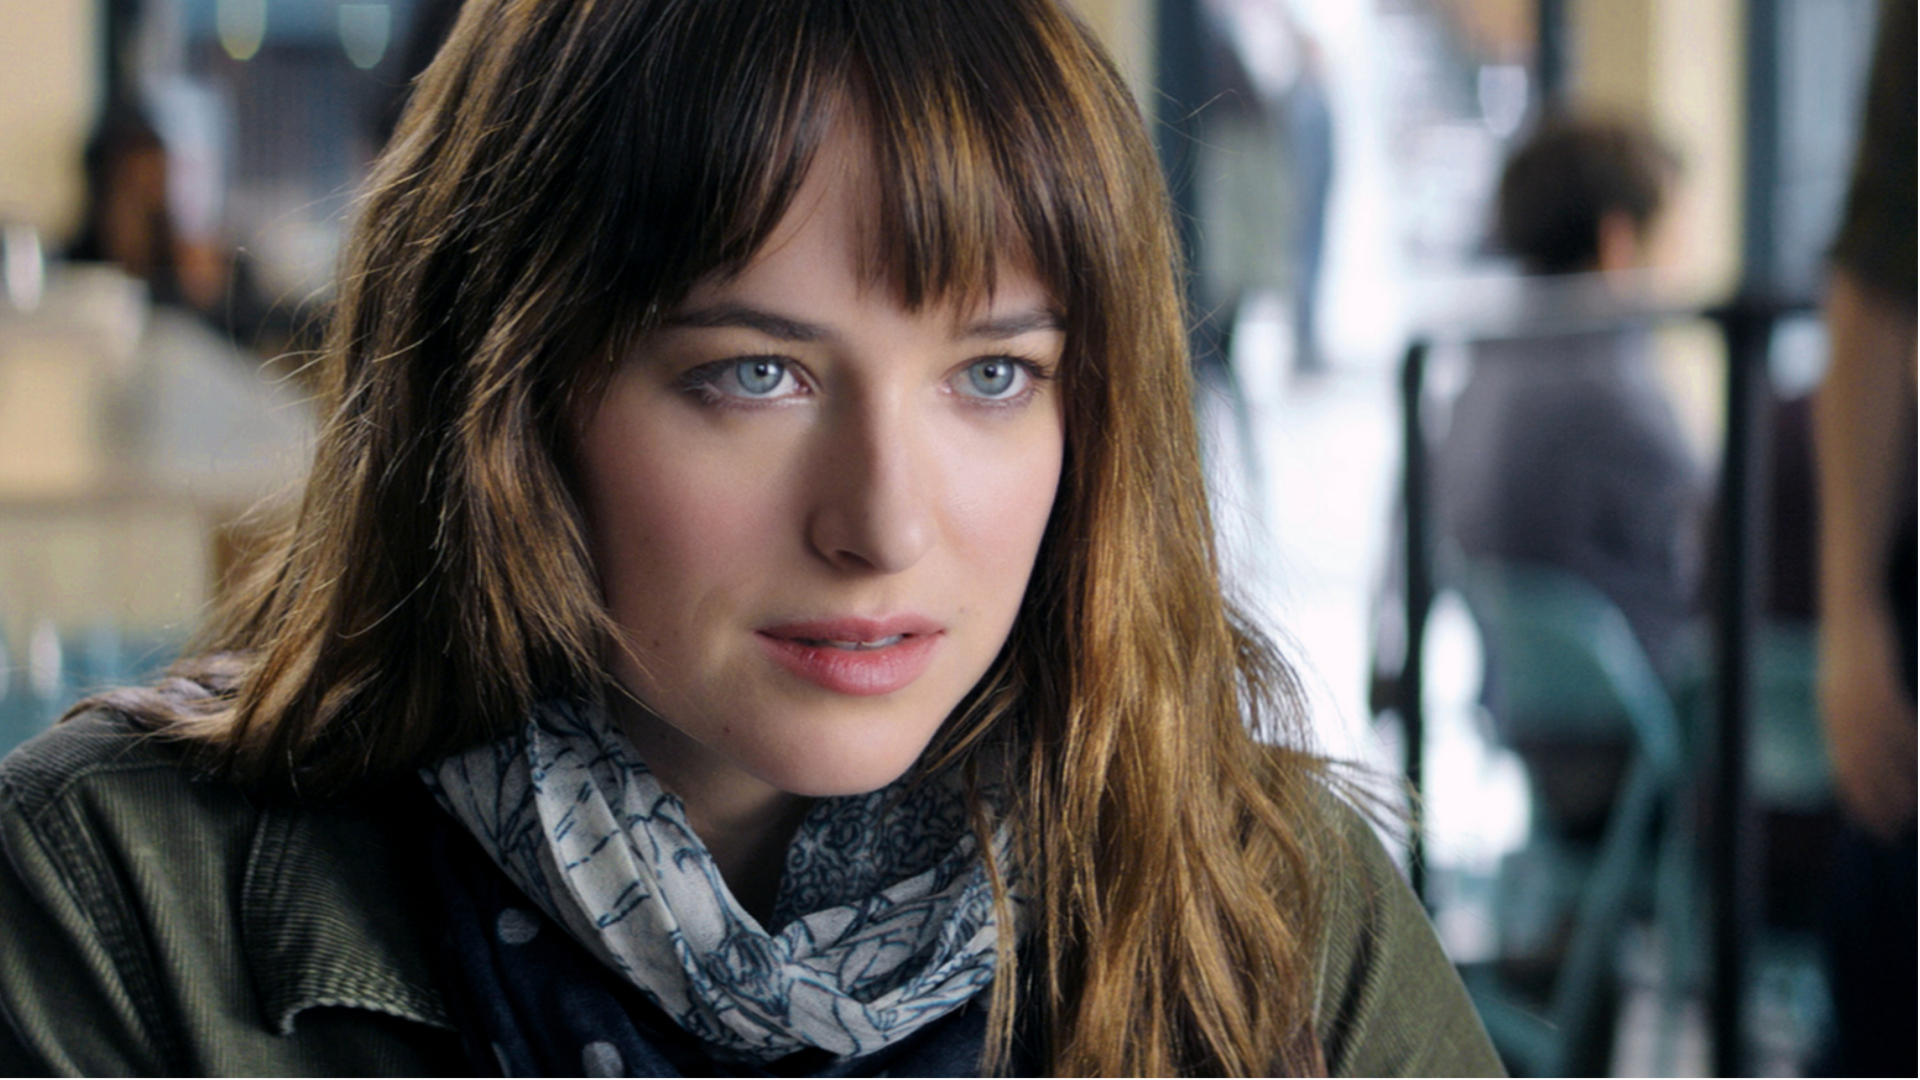 50 Shades Of Grey 4 Dakota Johnson opens up on Fifty Shades of Grey set problems | GamesRadar+